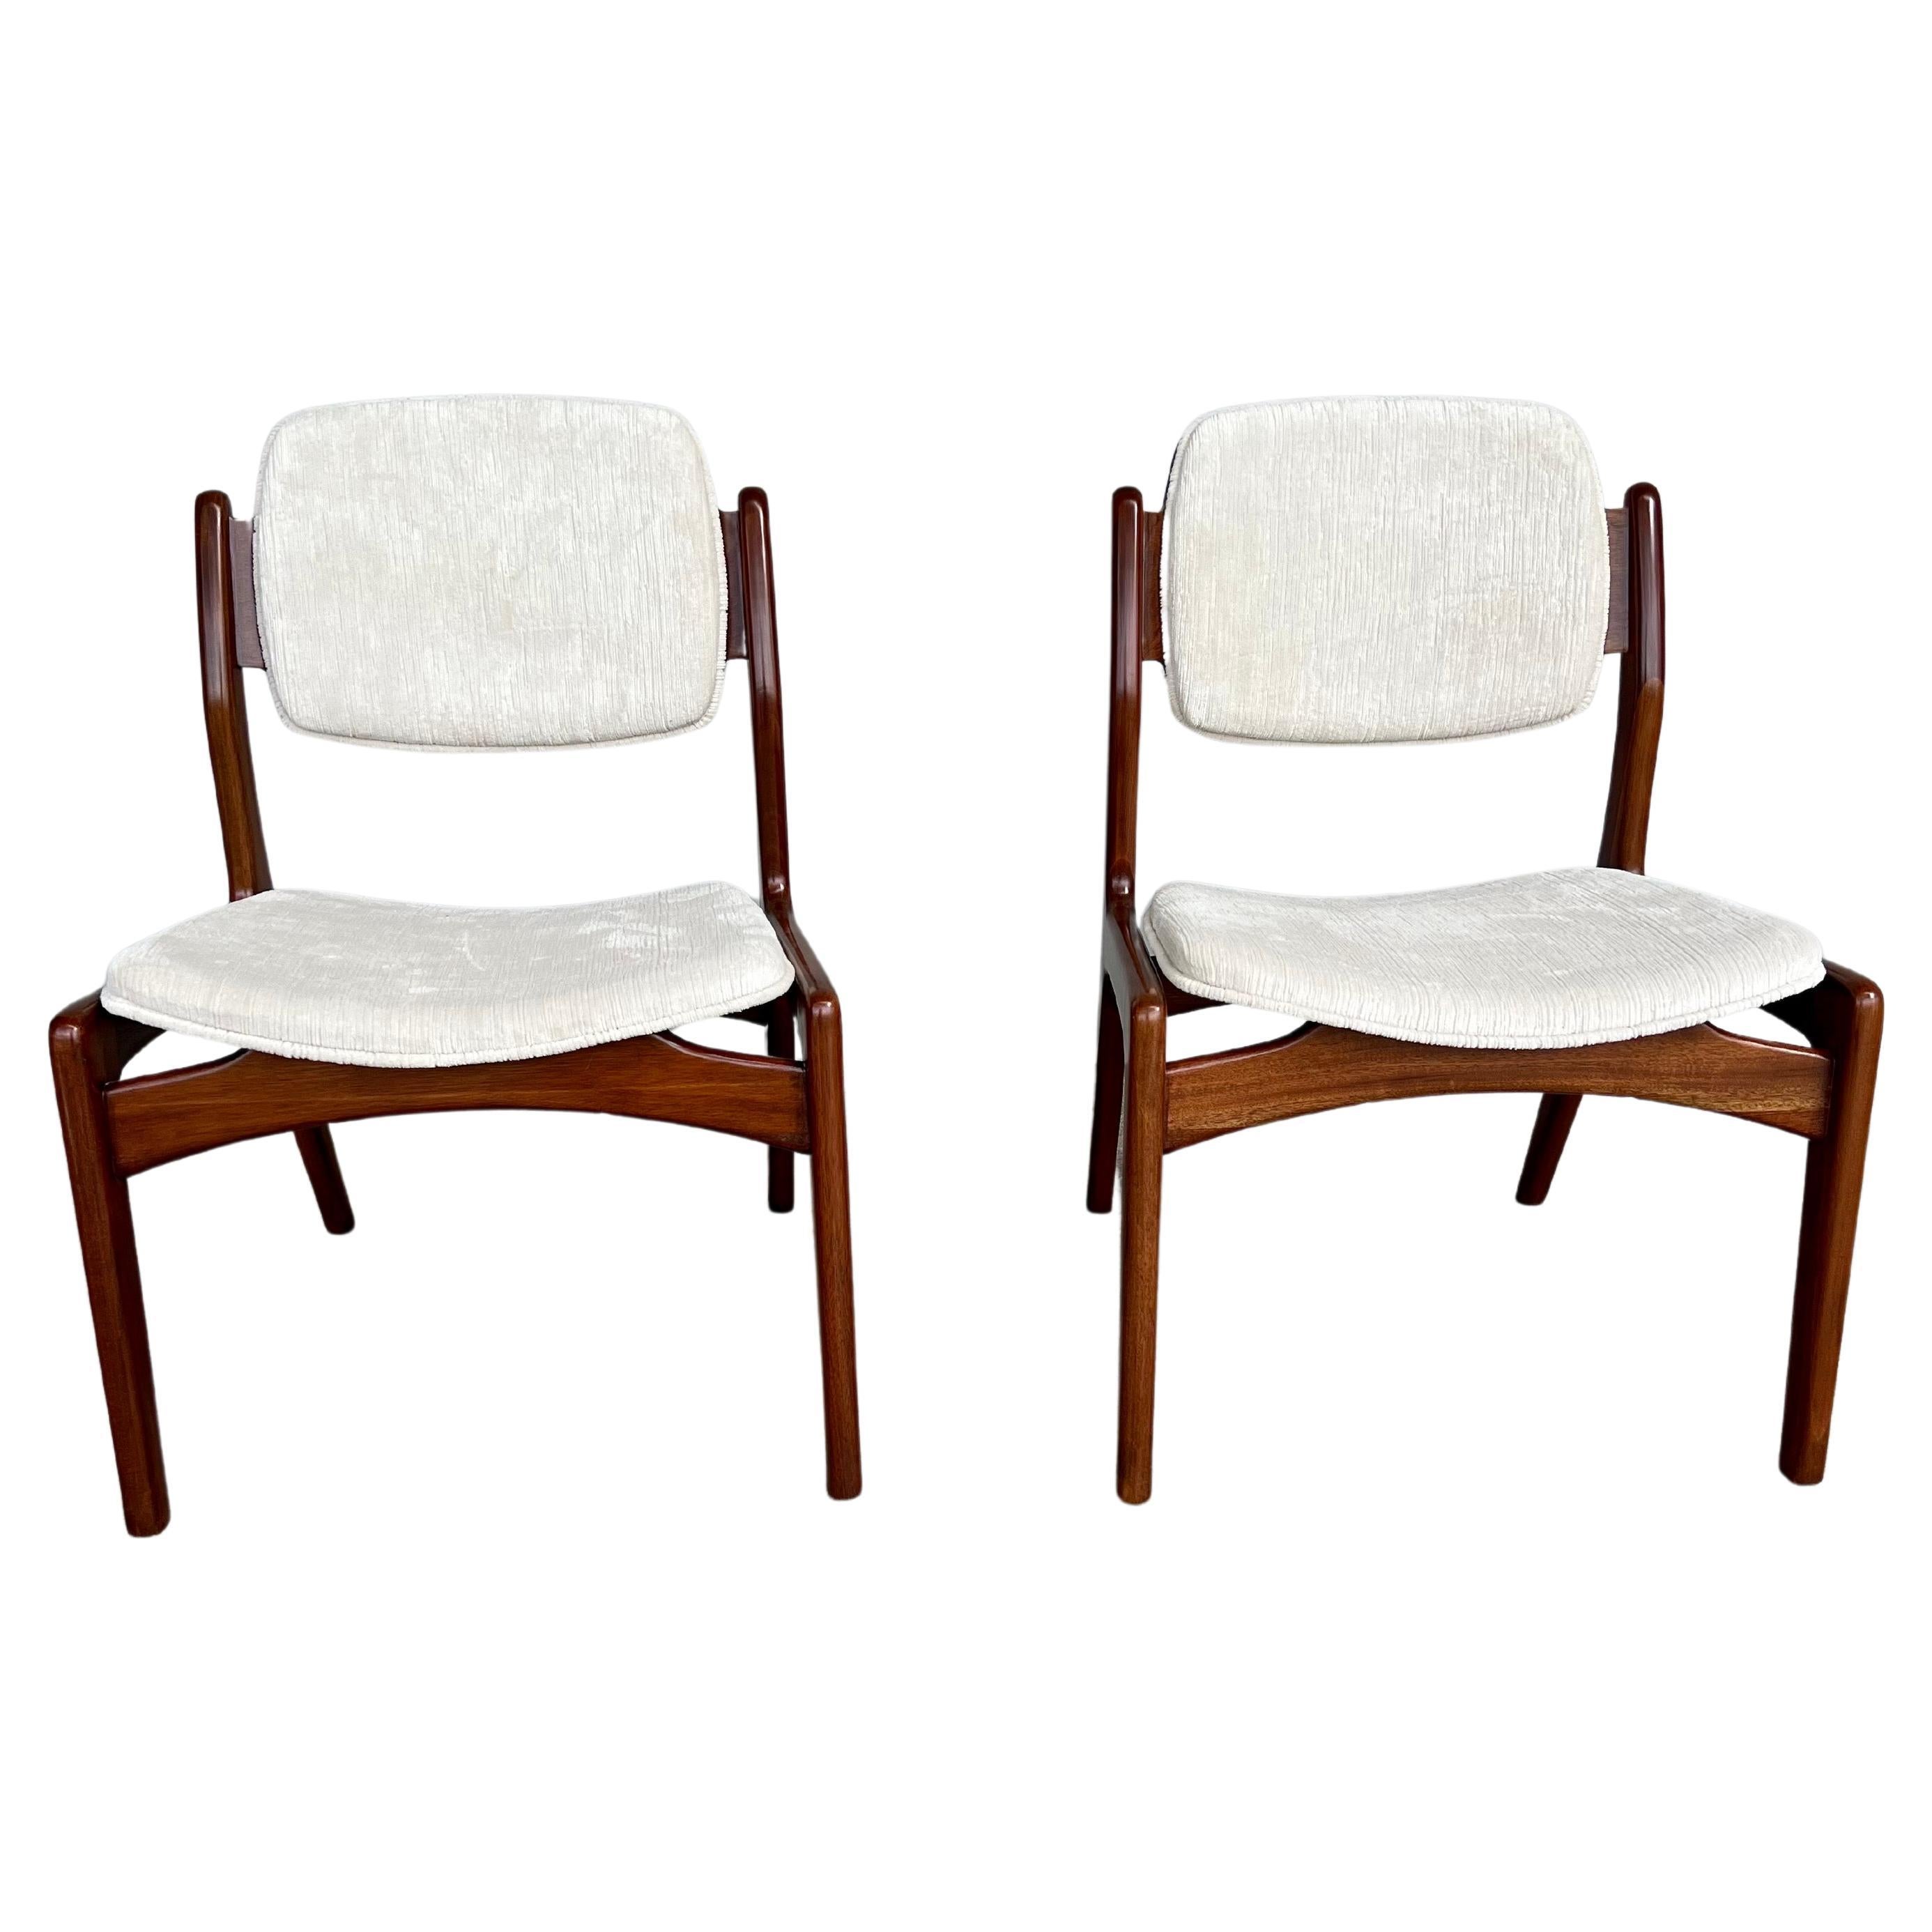 Michael van Beuren Original Pair of Chairs for Domus